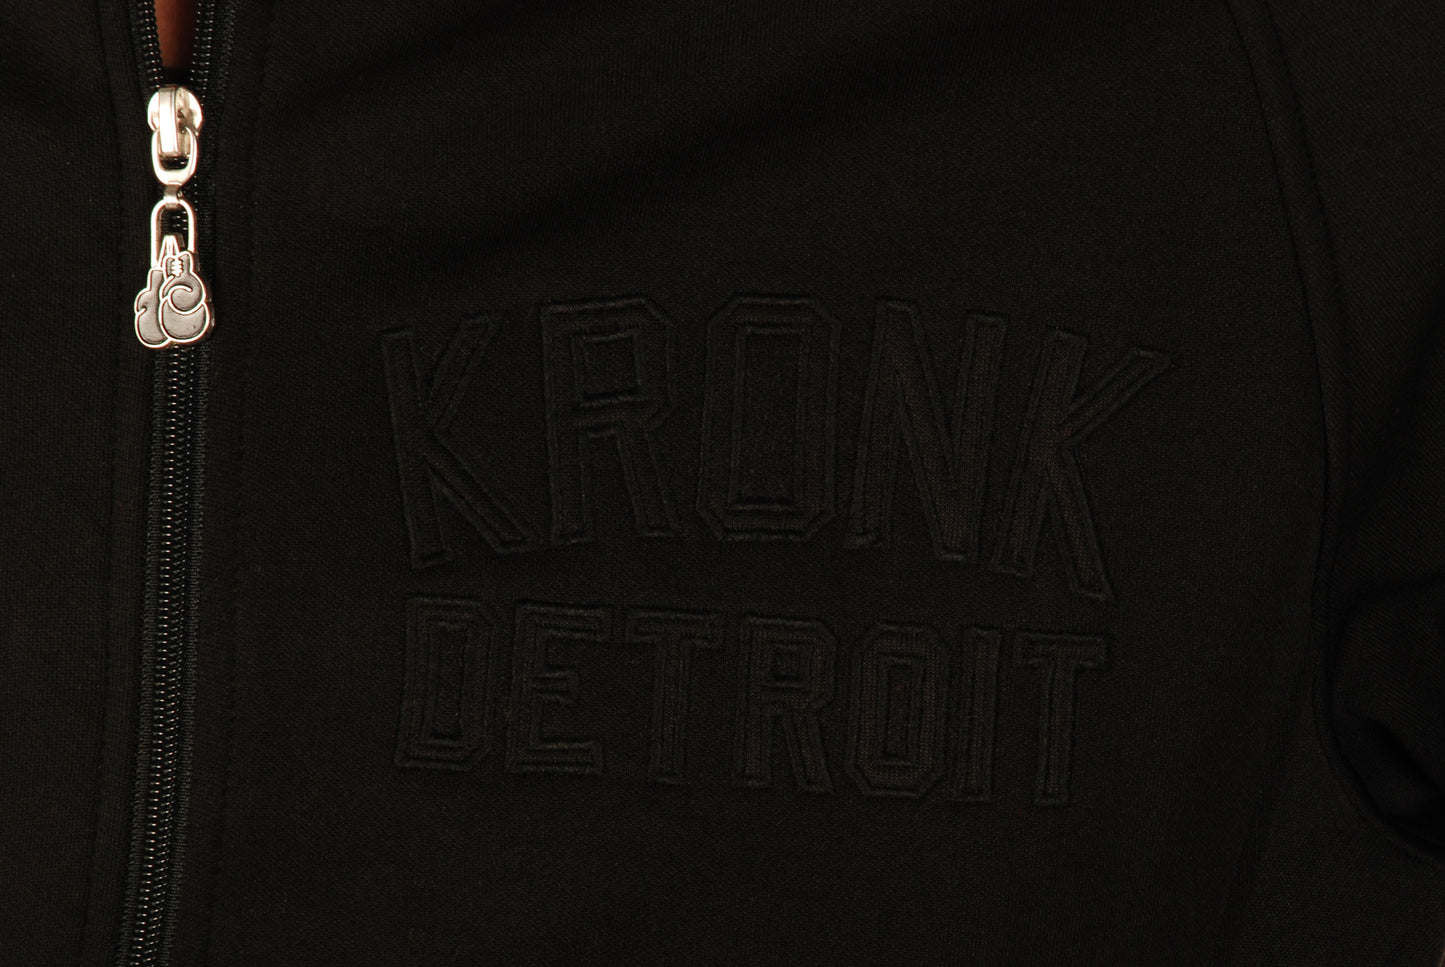 KRONK Iconic Detroit Zip Track Top Black